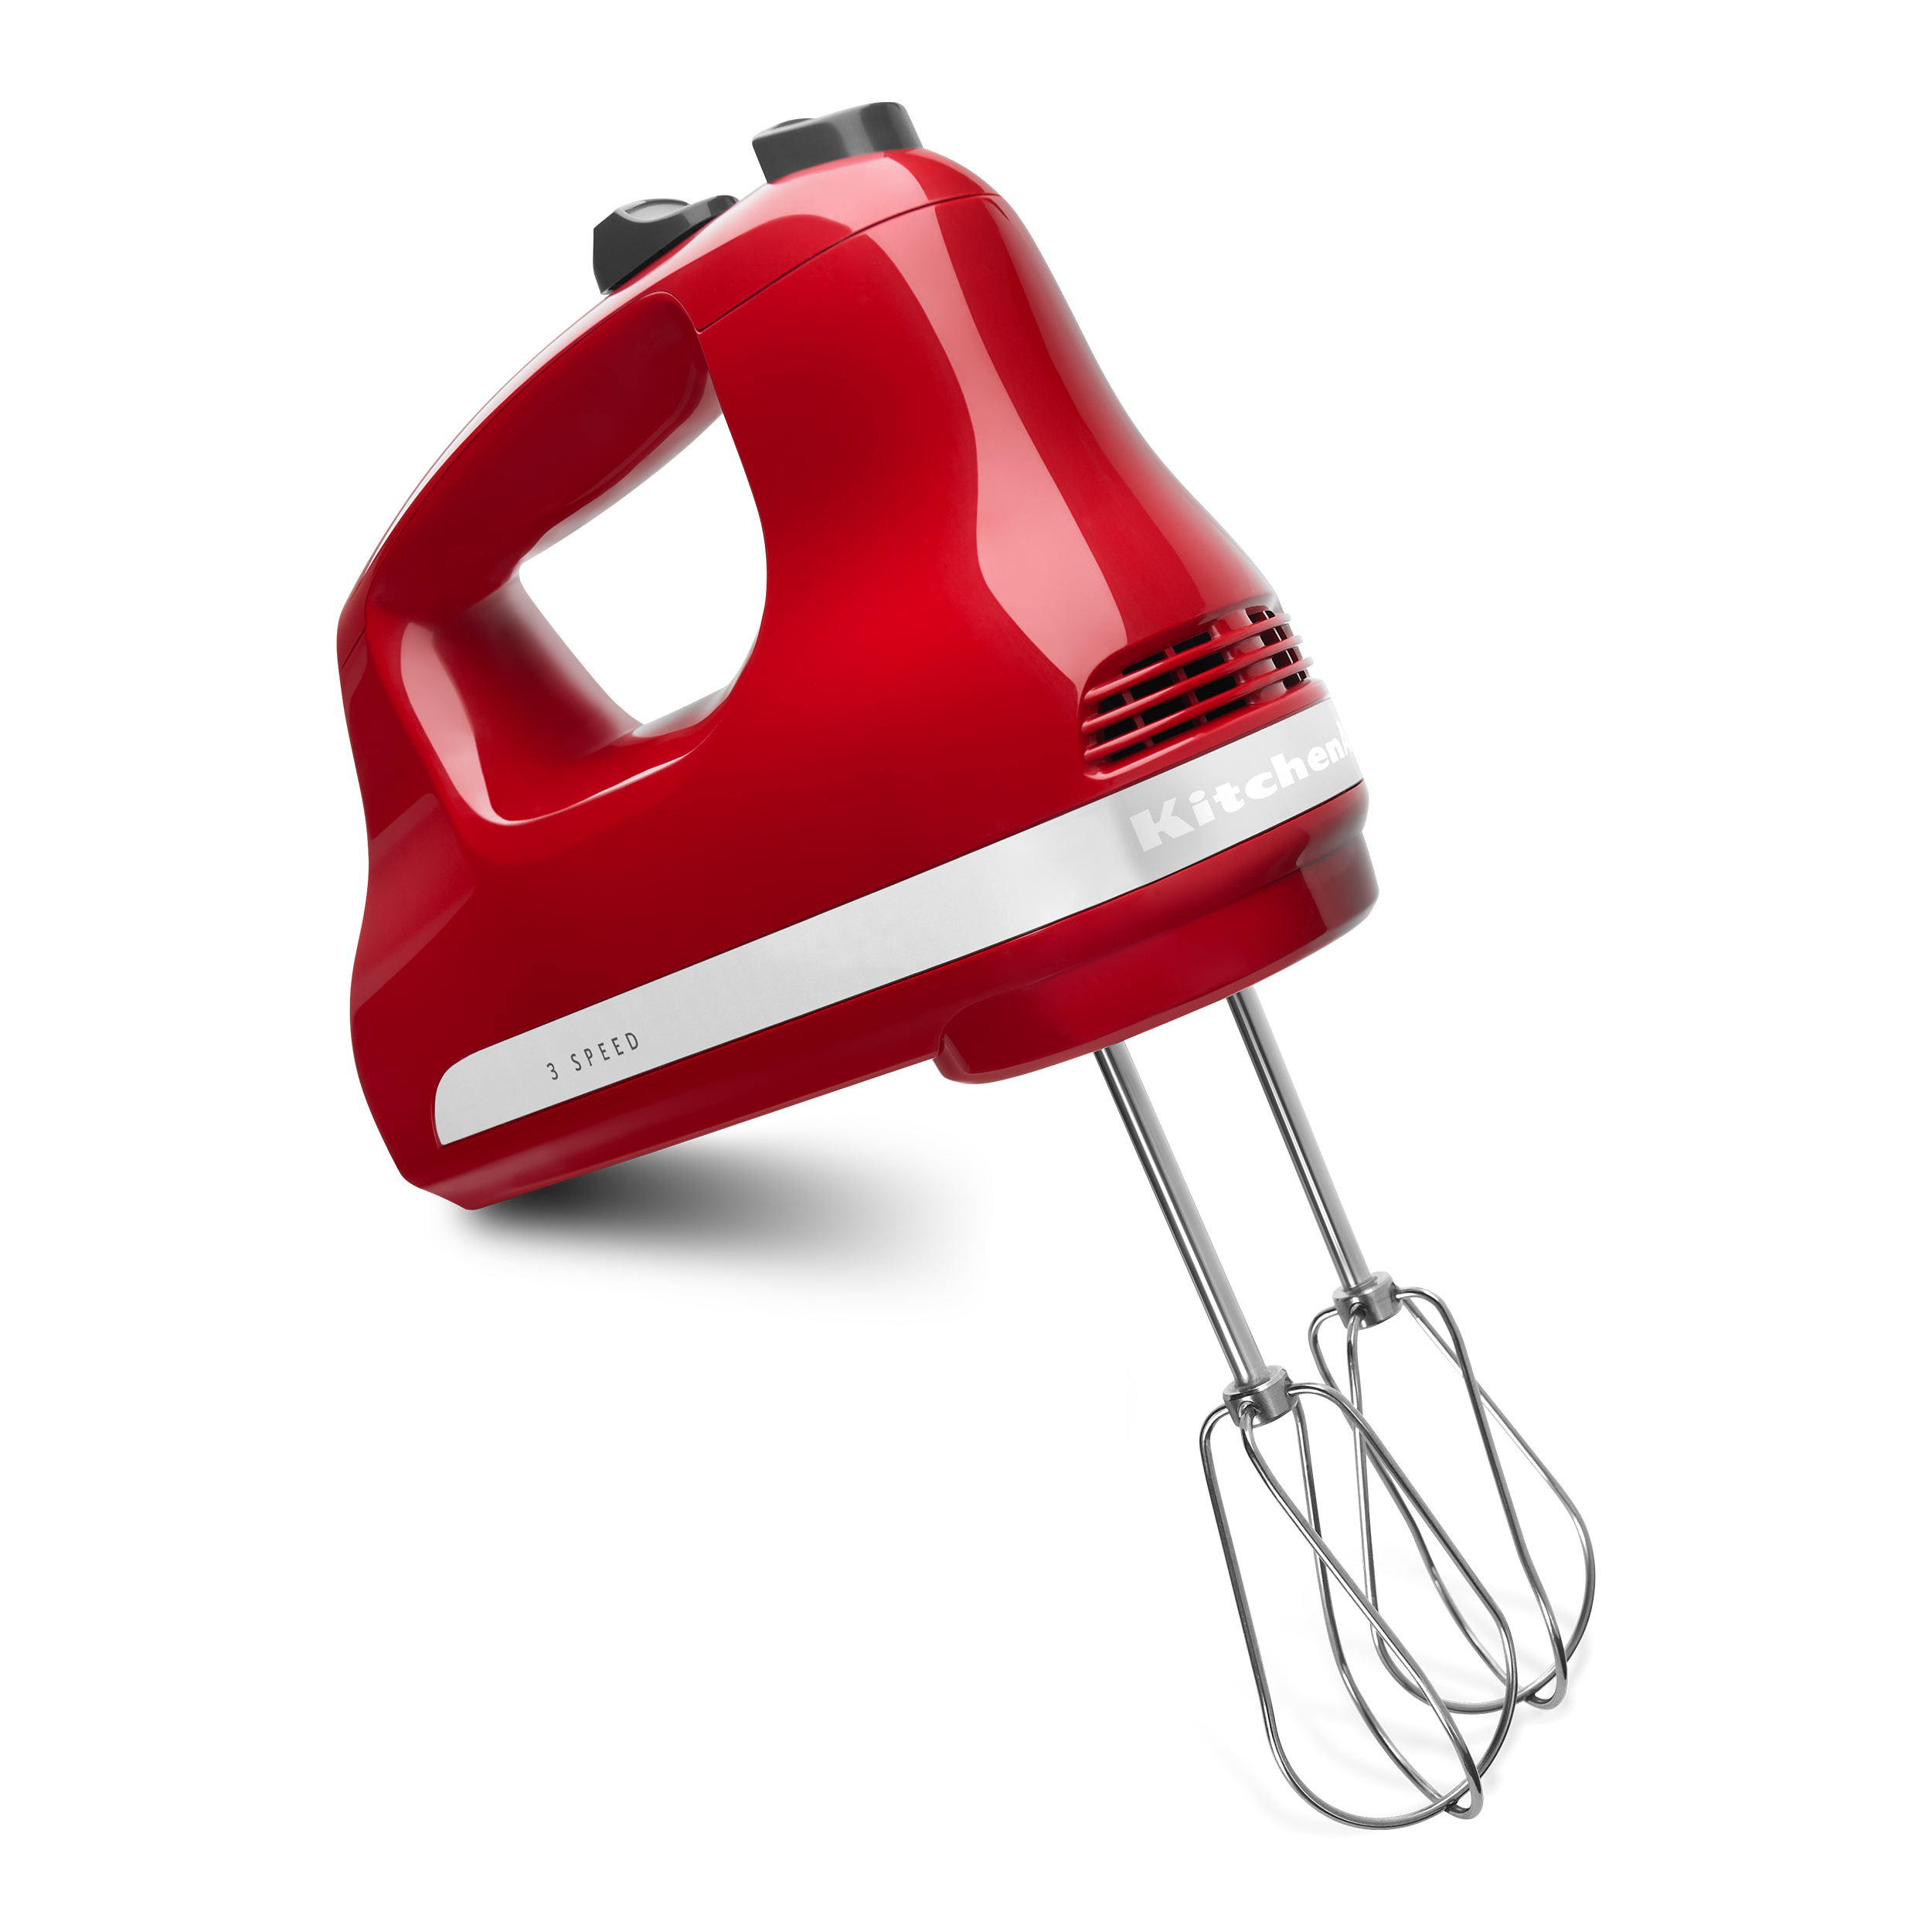 KitchenAid 3 Speed Hand Mixer, Empire Red, KHM312 - image 1 of 6